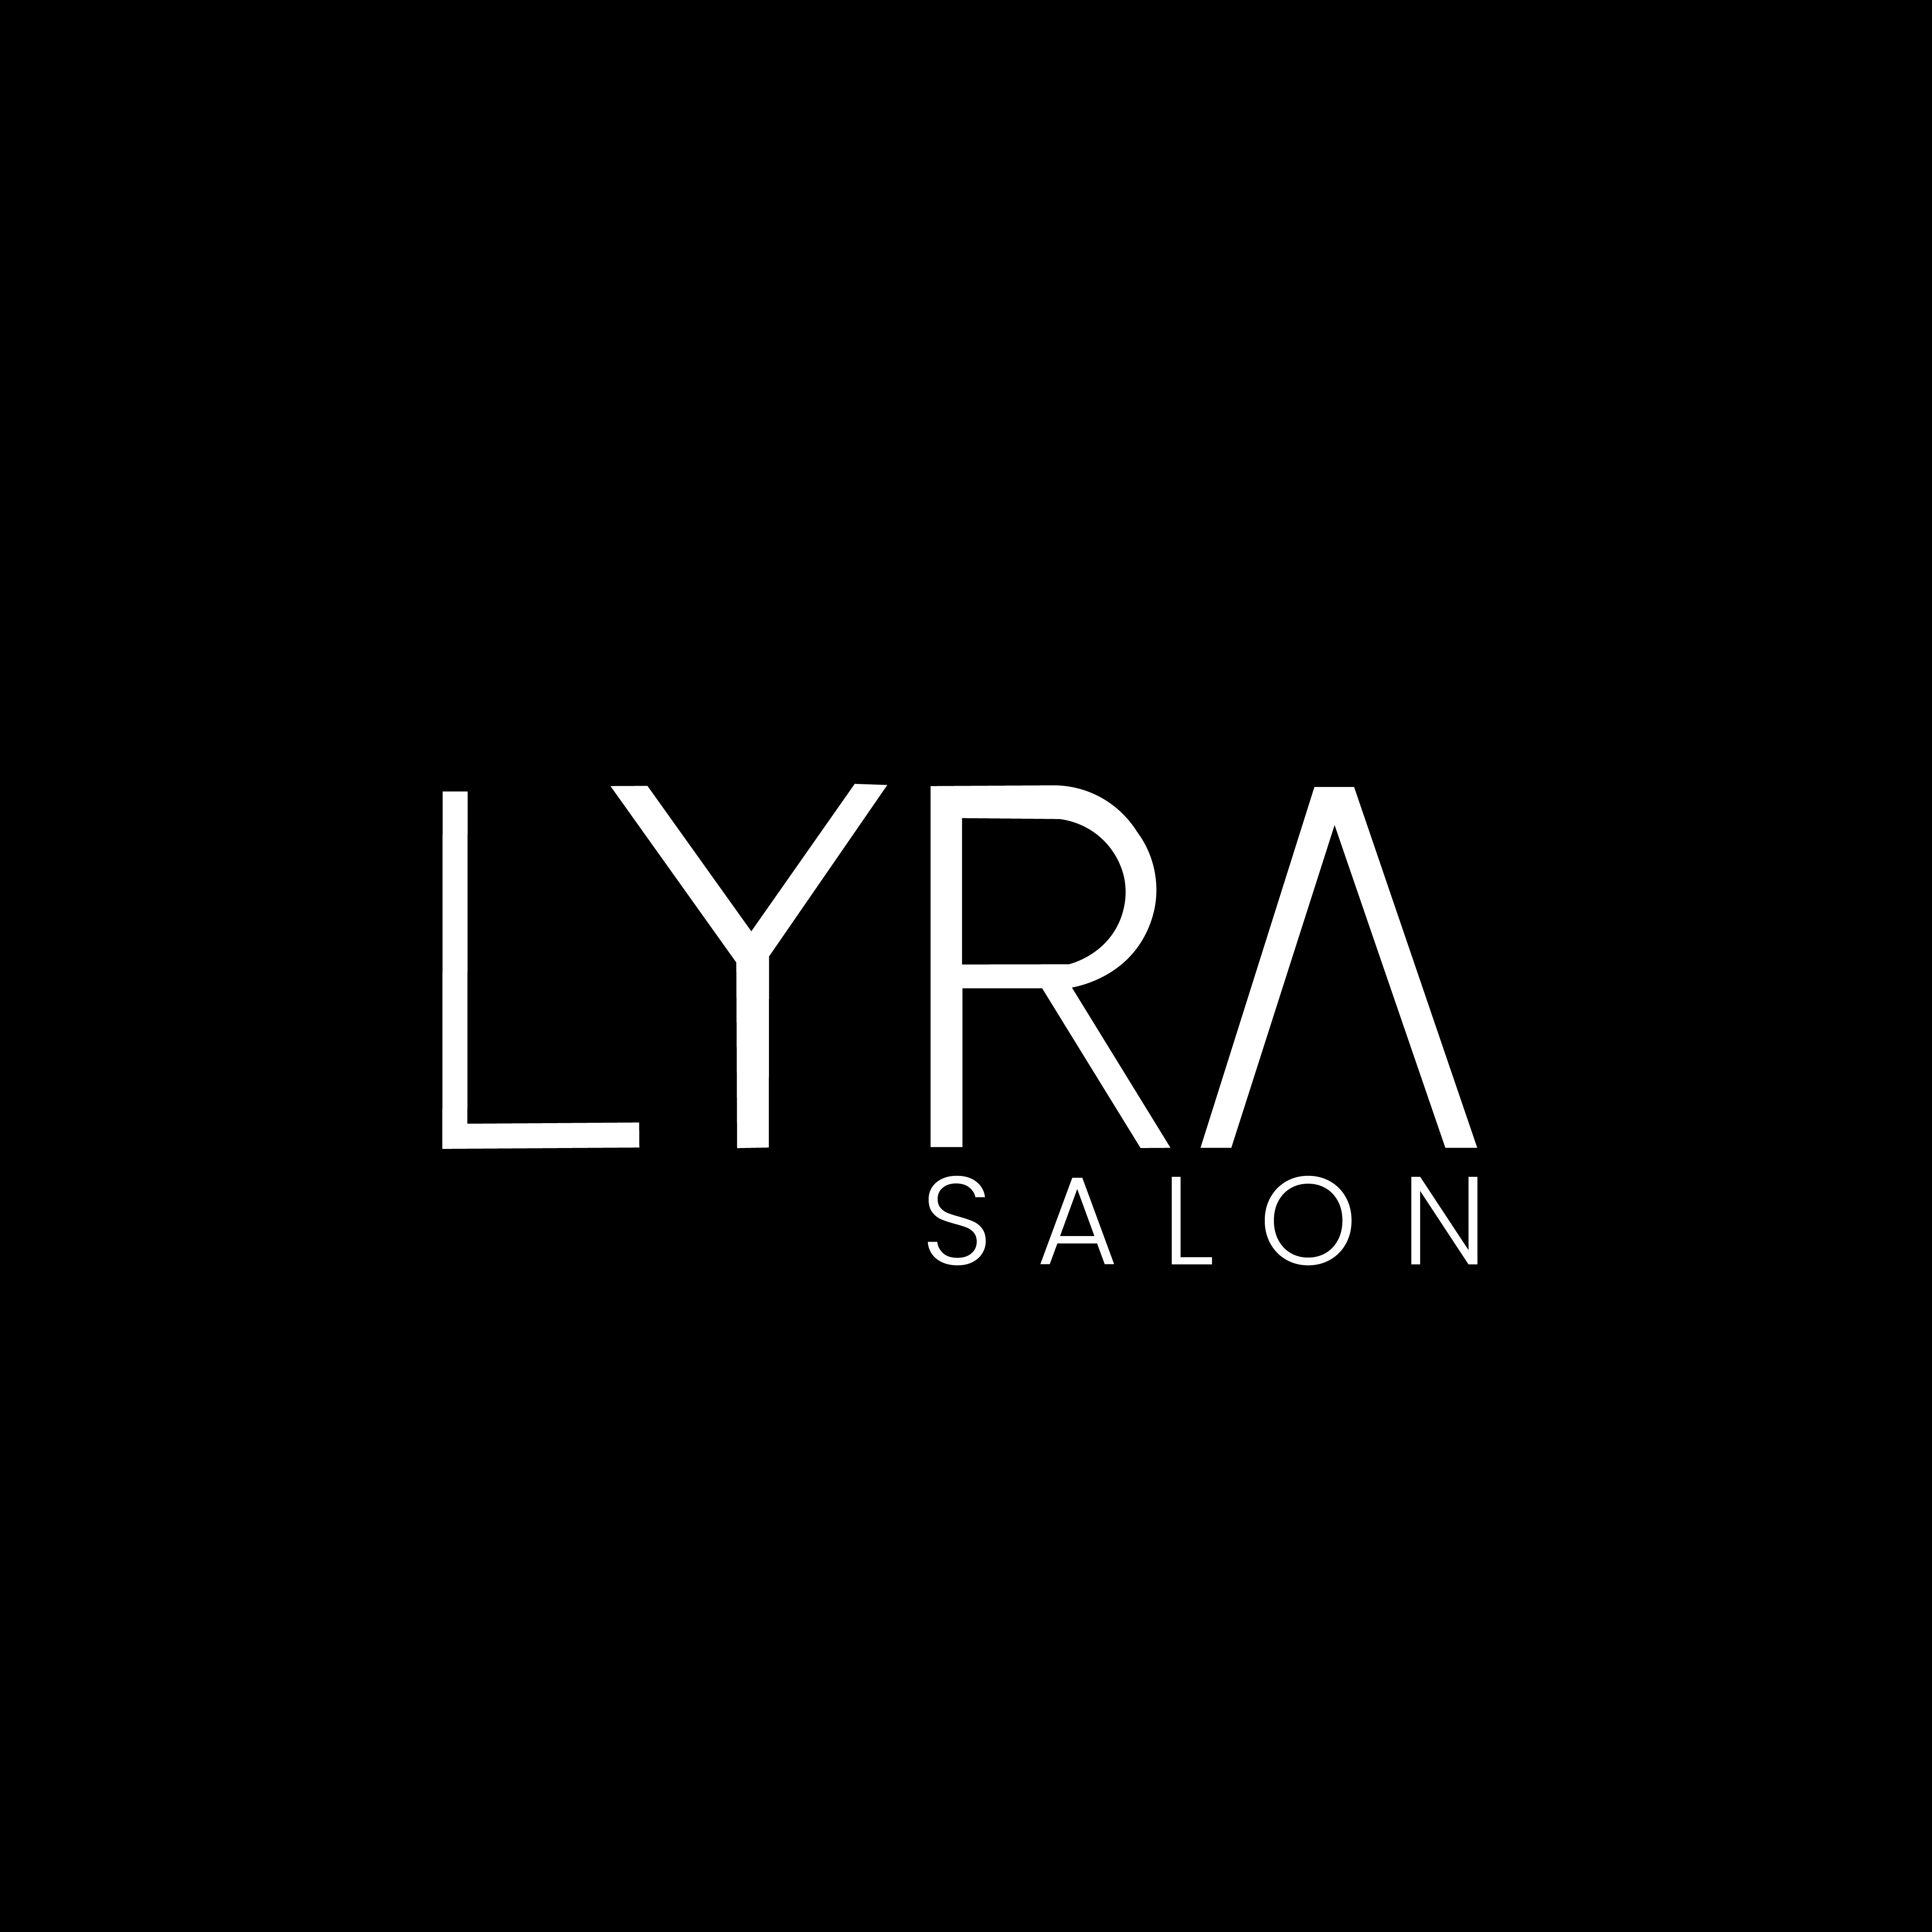 Lyra salon | the best beauty salon in kerala